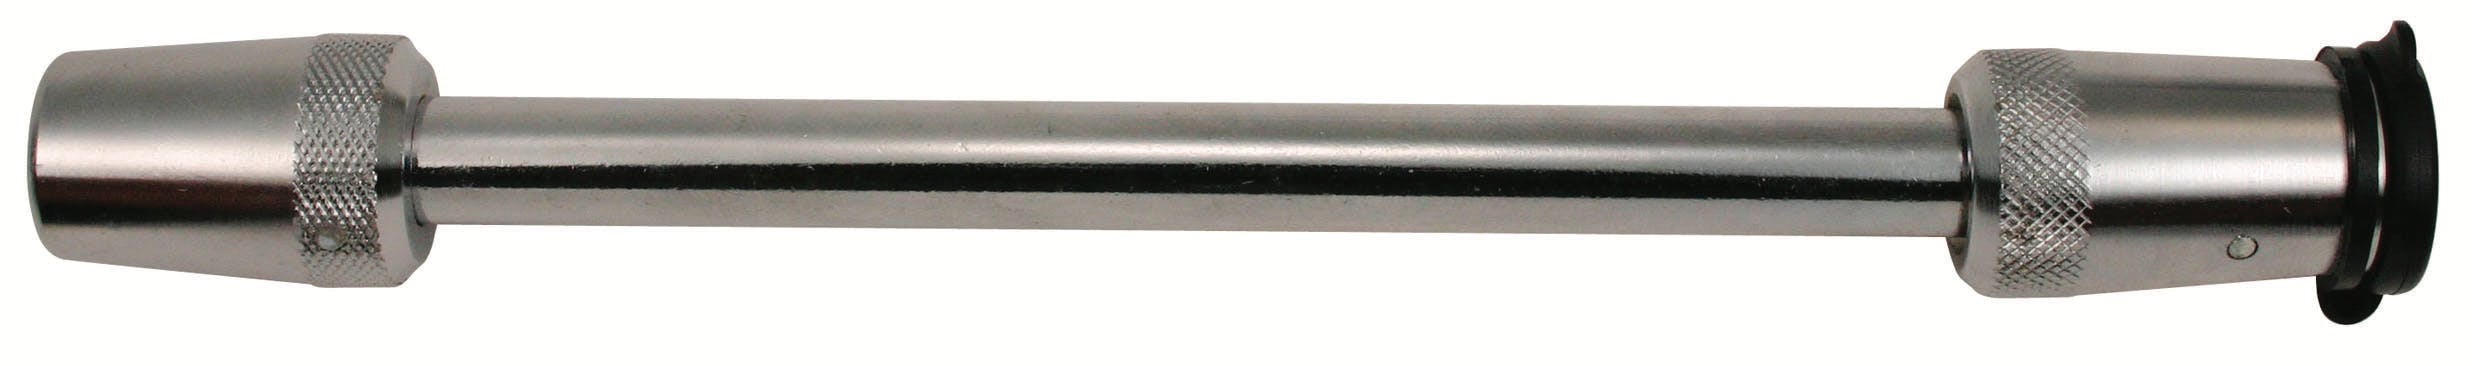 TRIMAX T6 Bow Locking Pin - 5 1/2 inch X 1/2 inch Dia. Watercraft